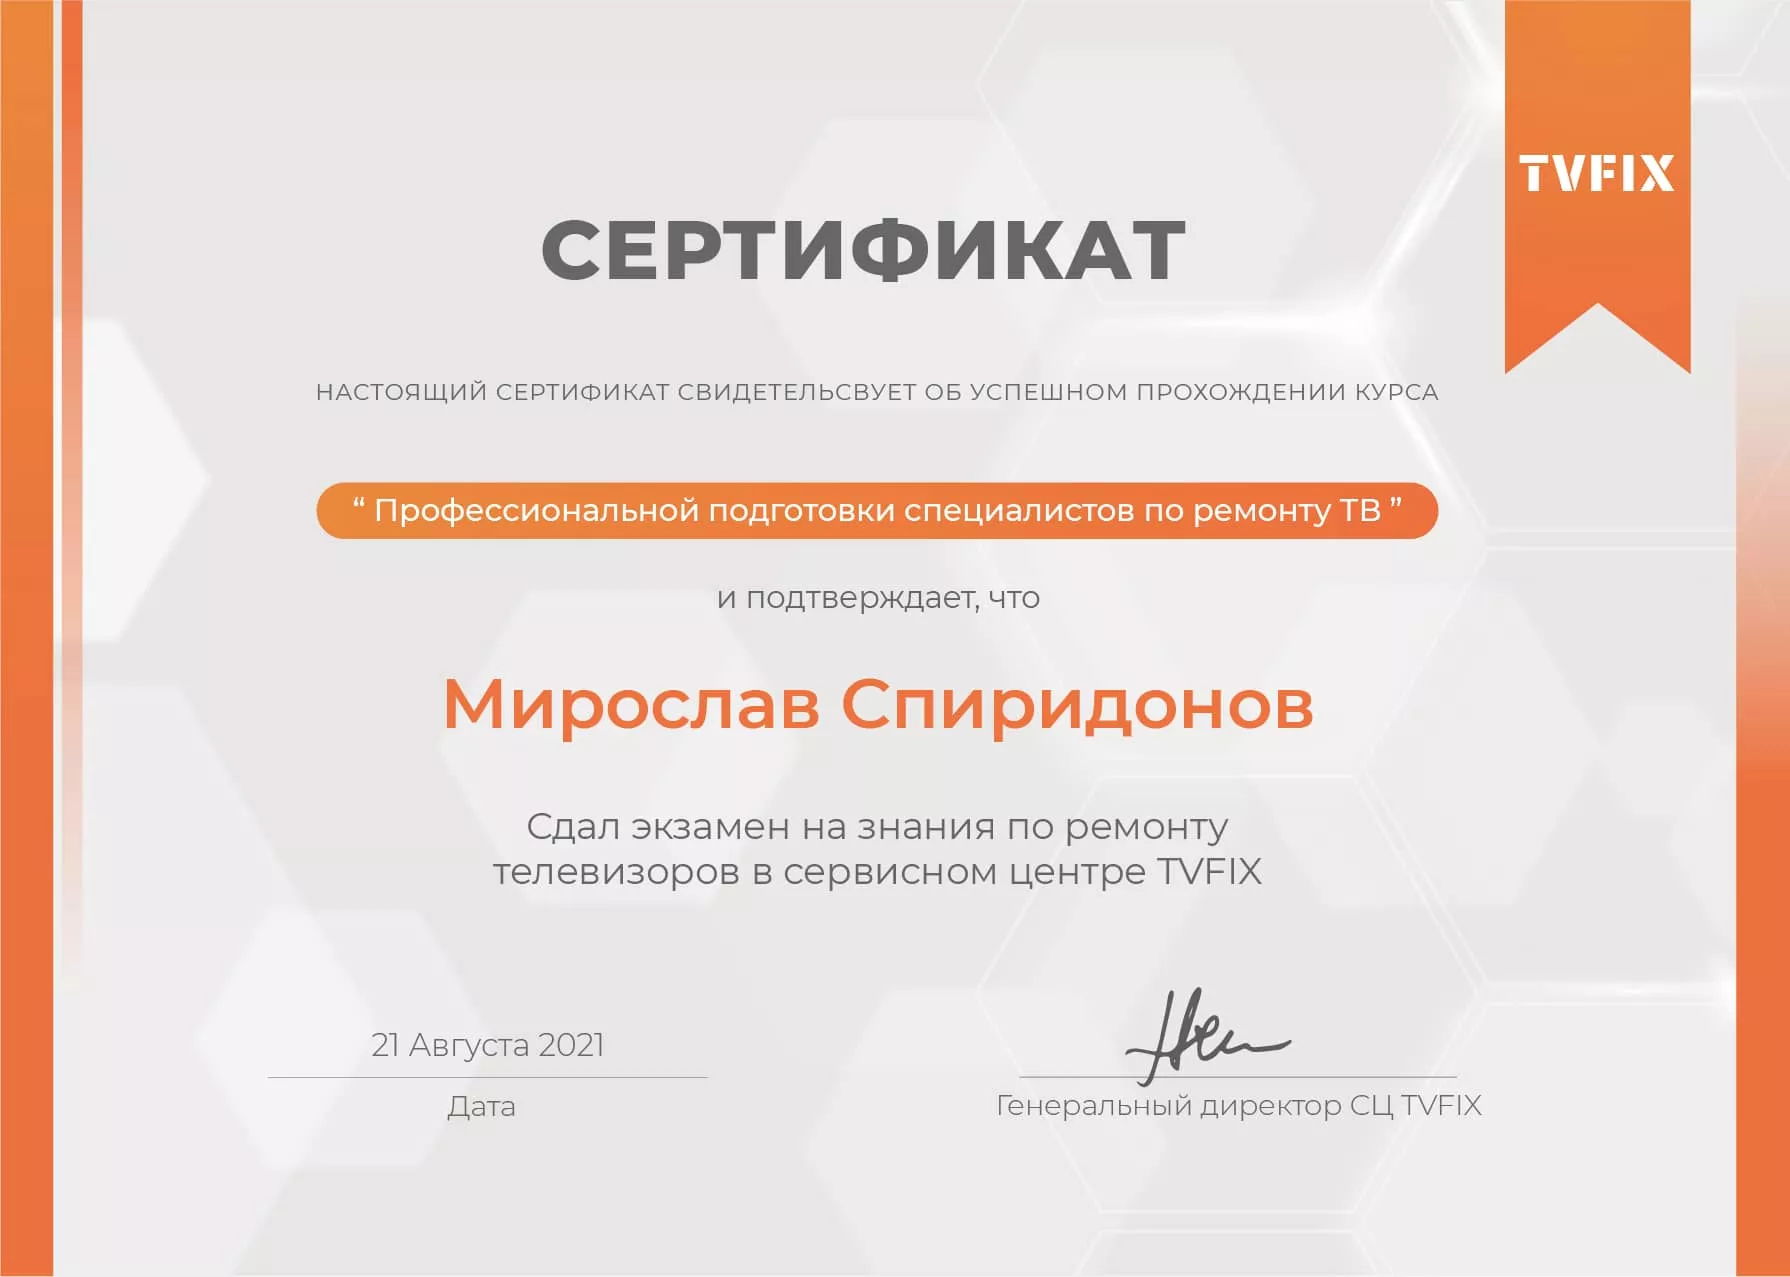 Мирослав Спиридонов сертификат телемастера